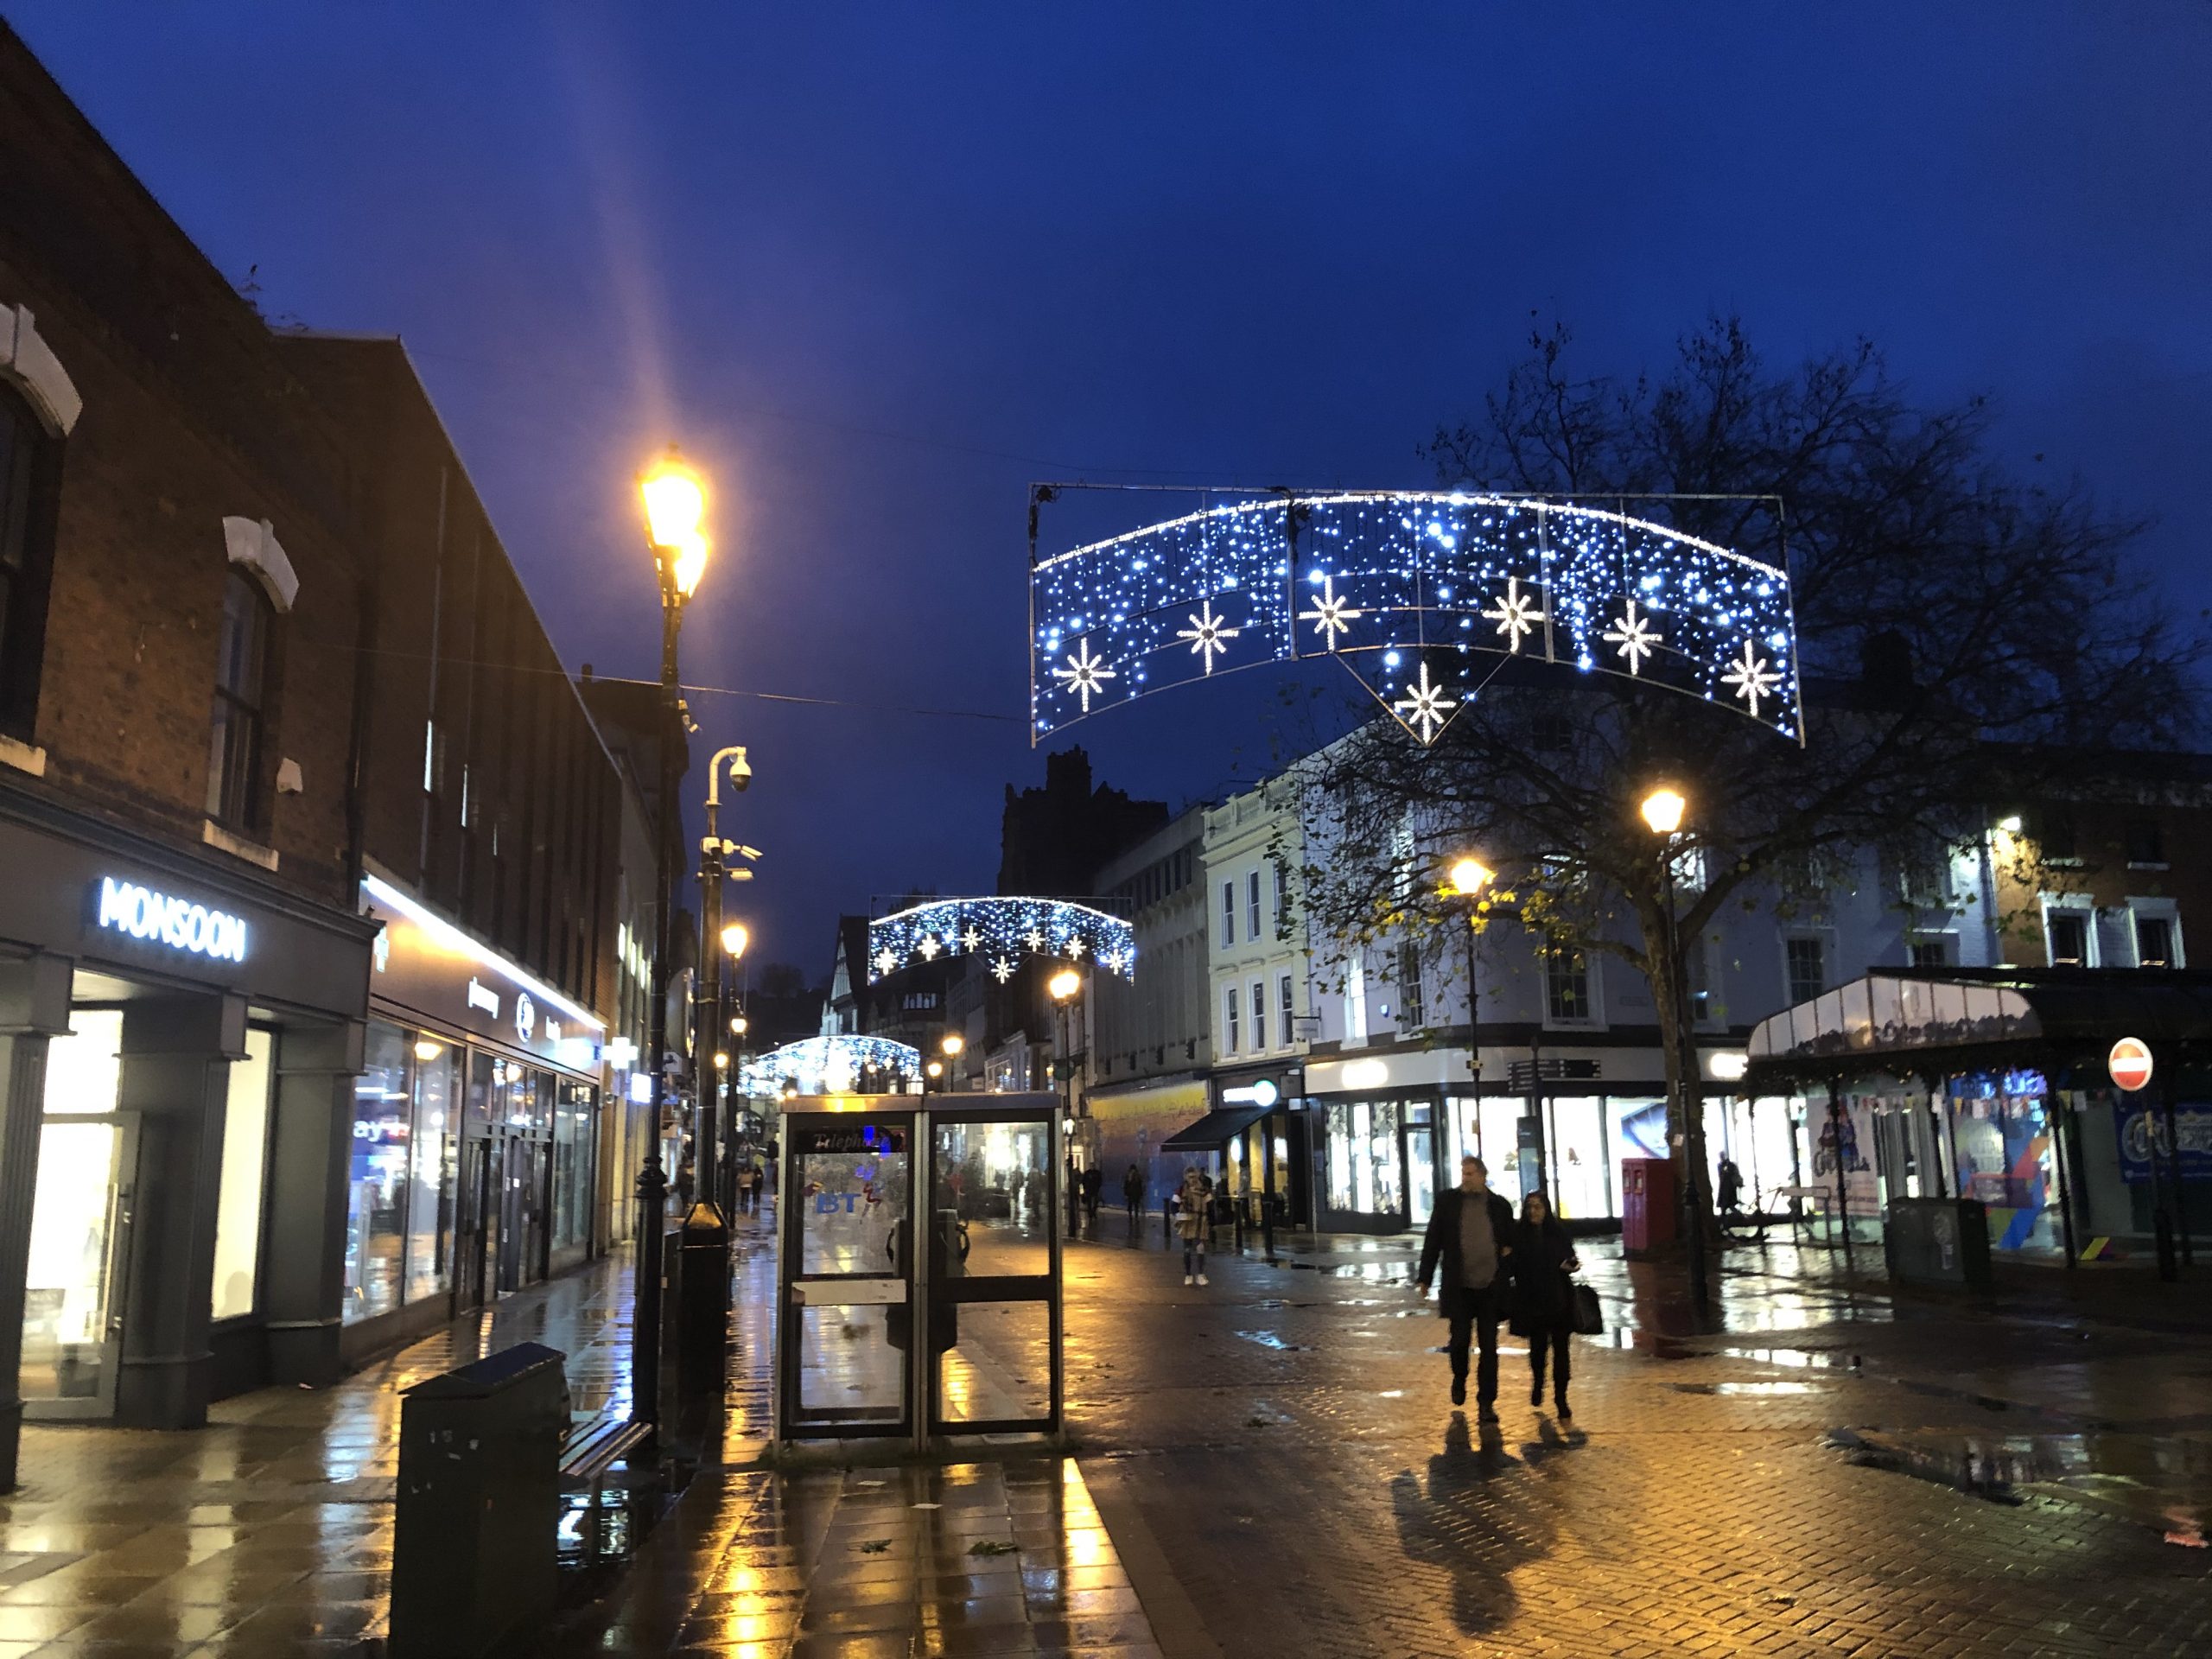 Overhead Christmas lights on the High Street.